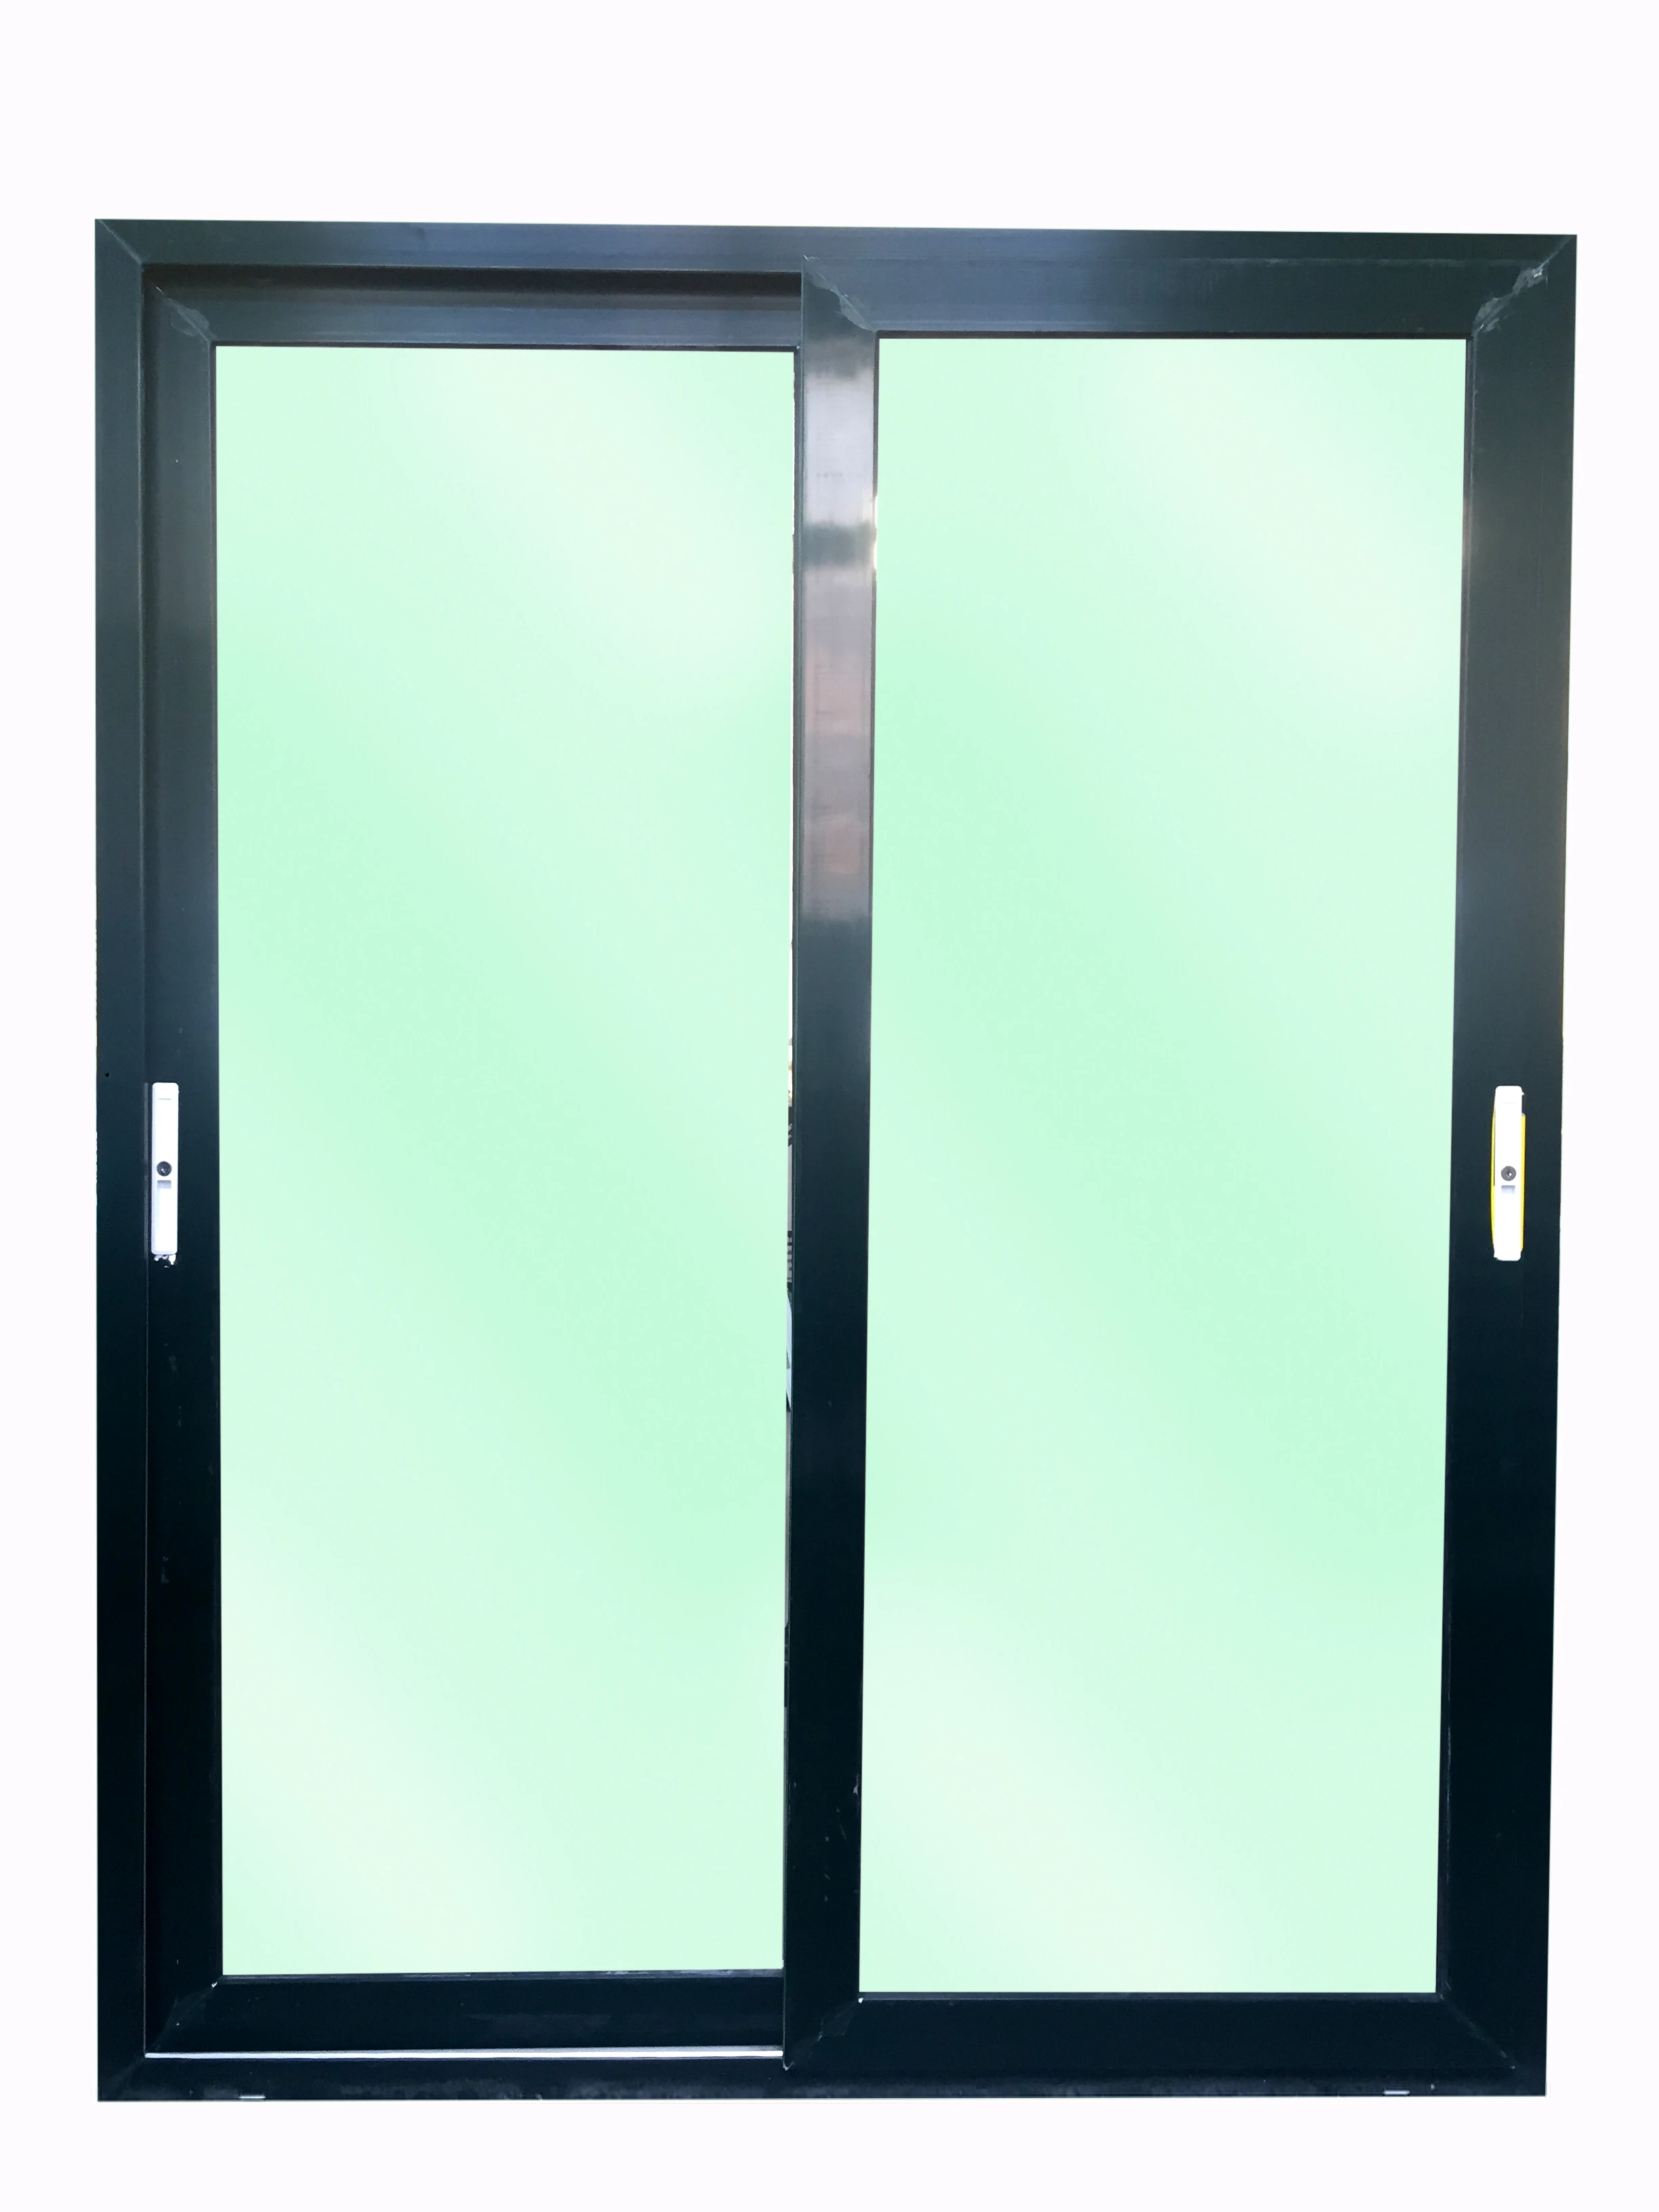 Hot Sale Upvc Window And Door Pvc Sash Window Upvc Windows With Grill